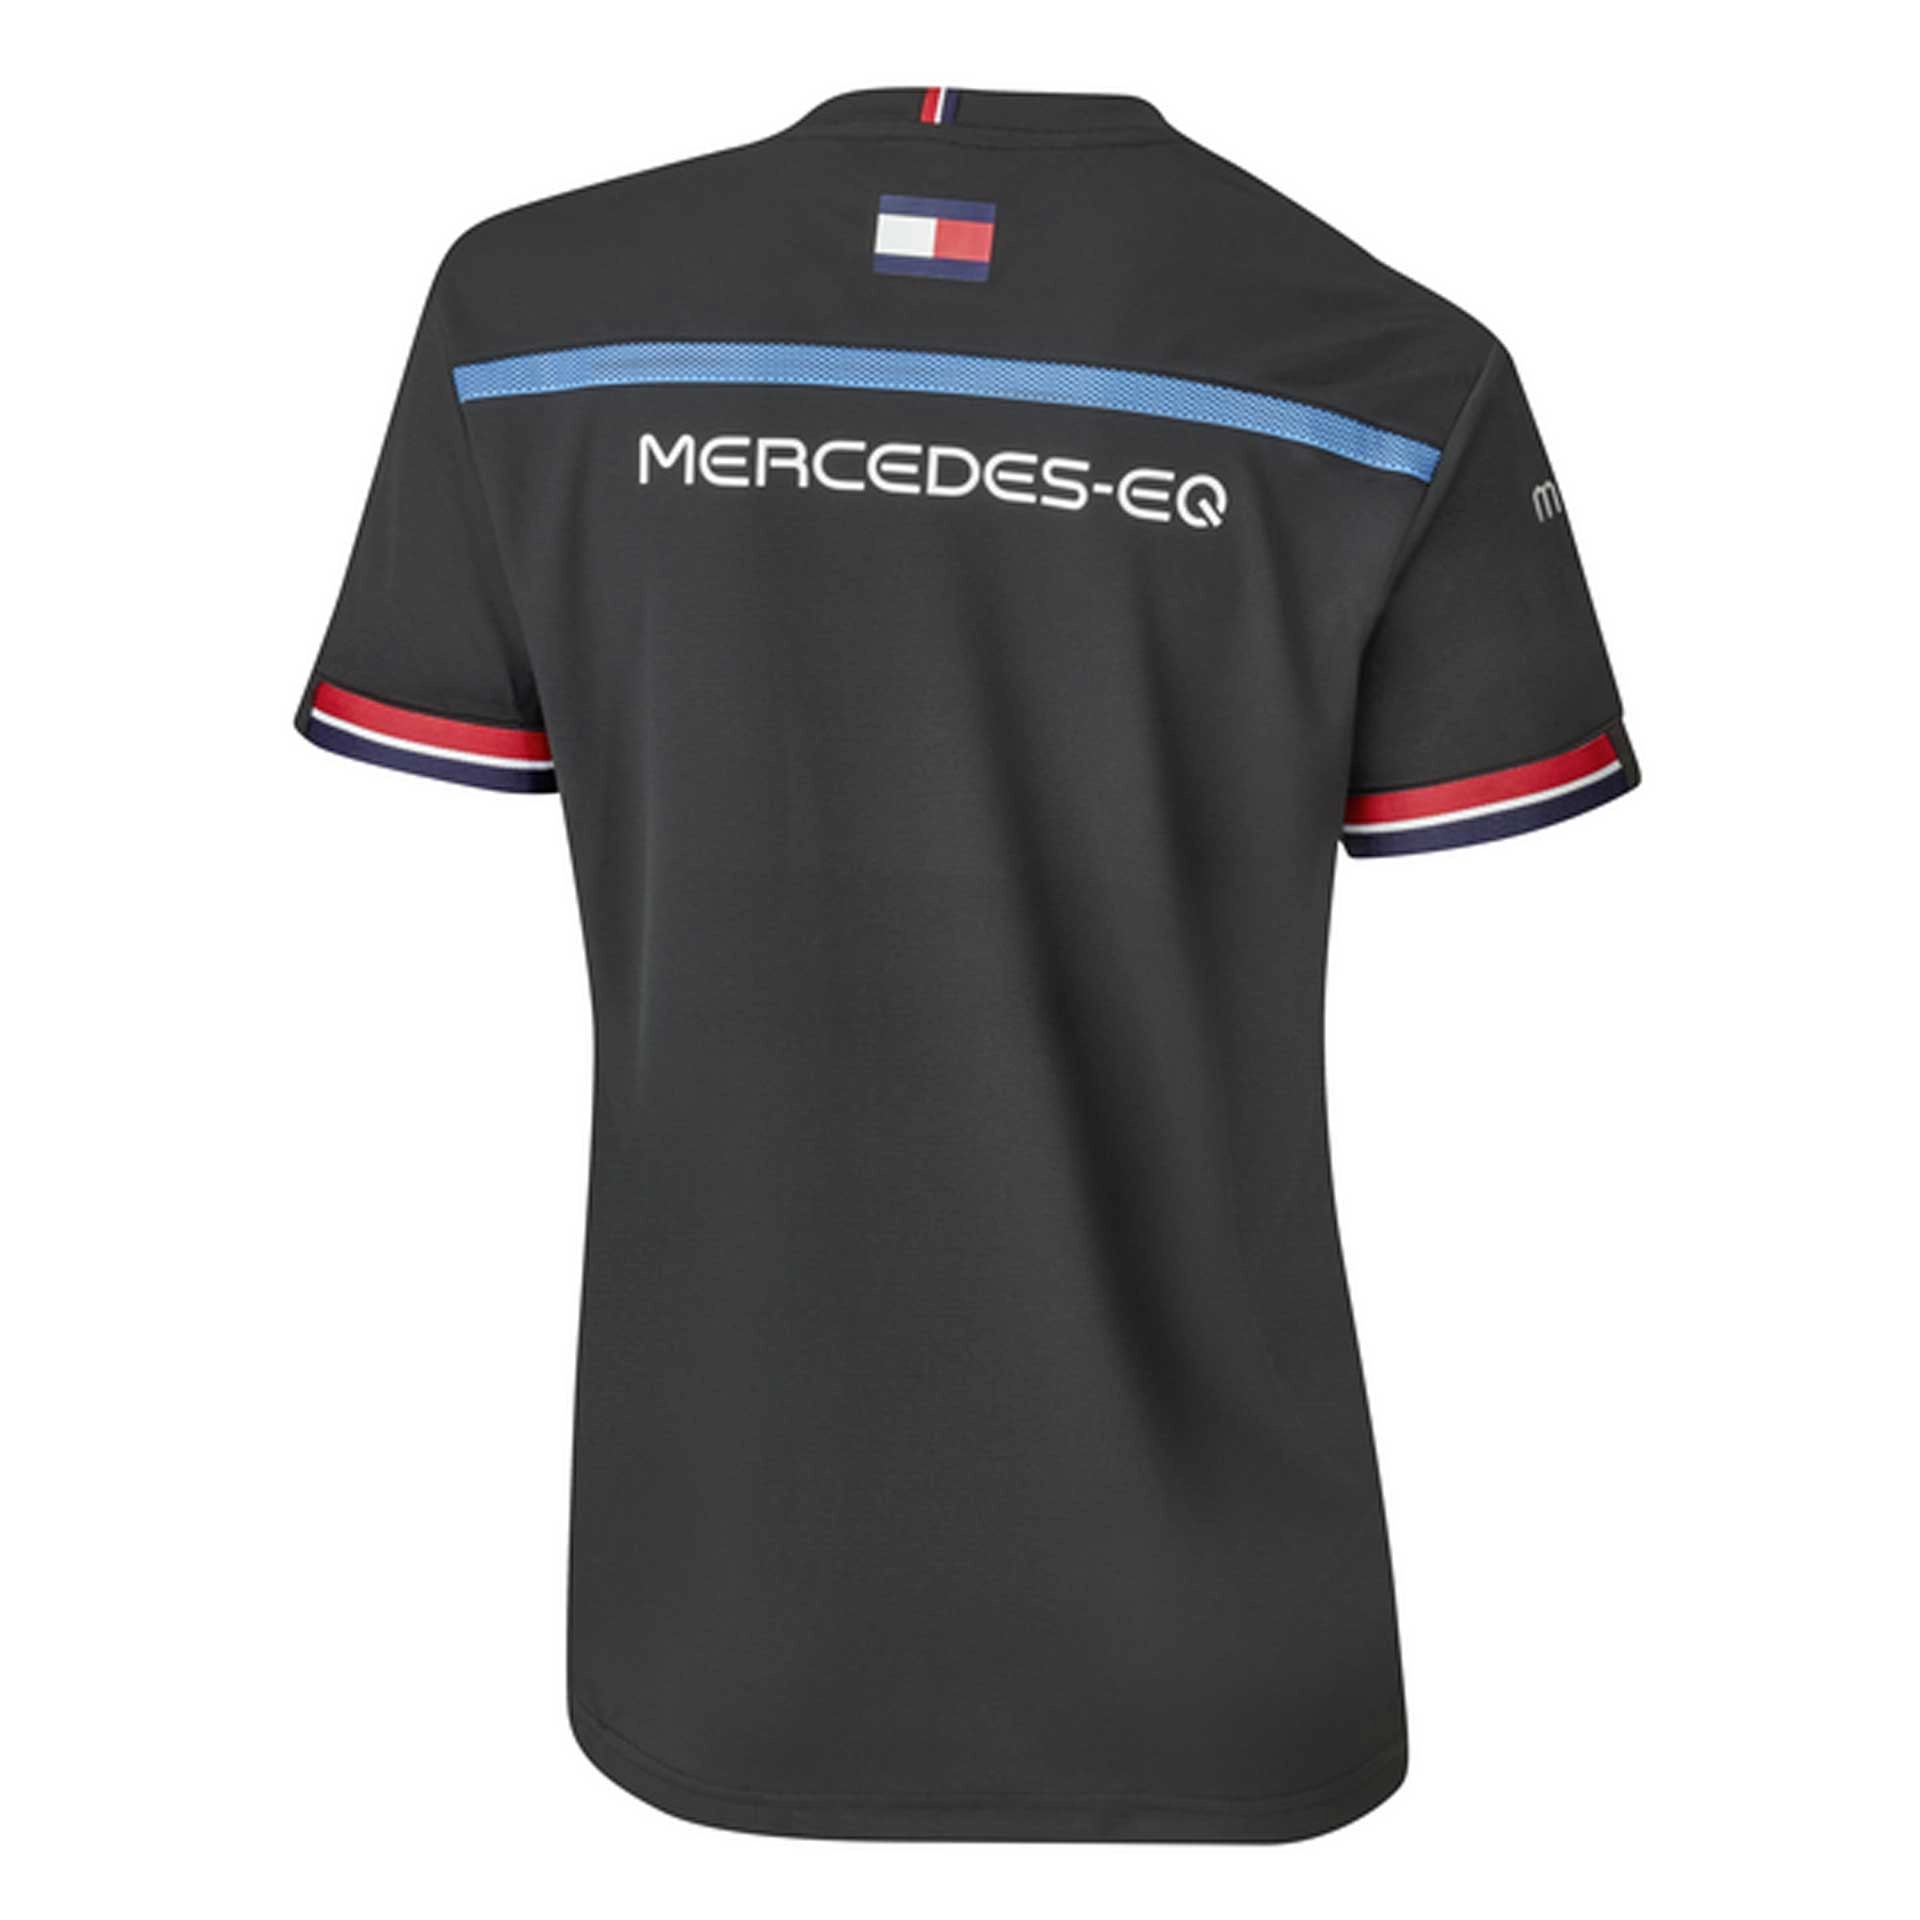 B67997869_mercedes-eq_t-shirt_damen_schwarz_team-shirt_rosier-onlineshop2